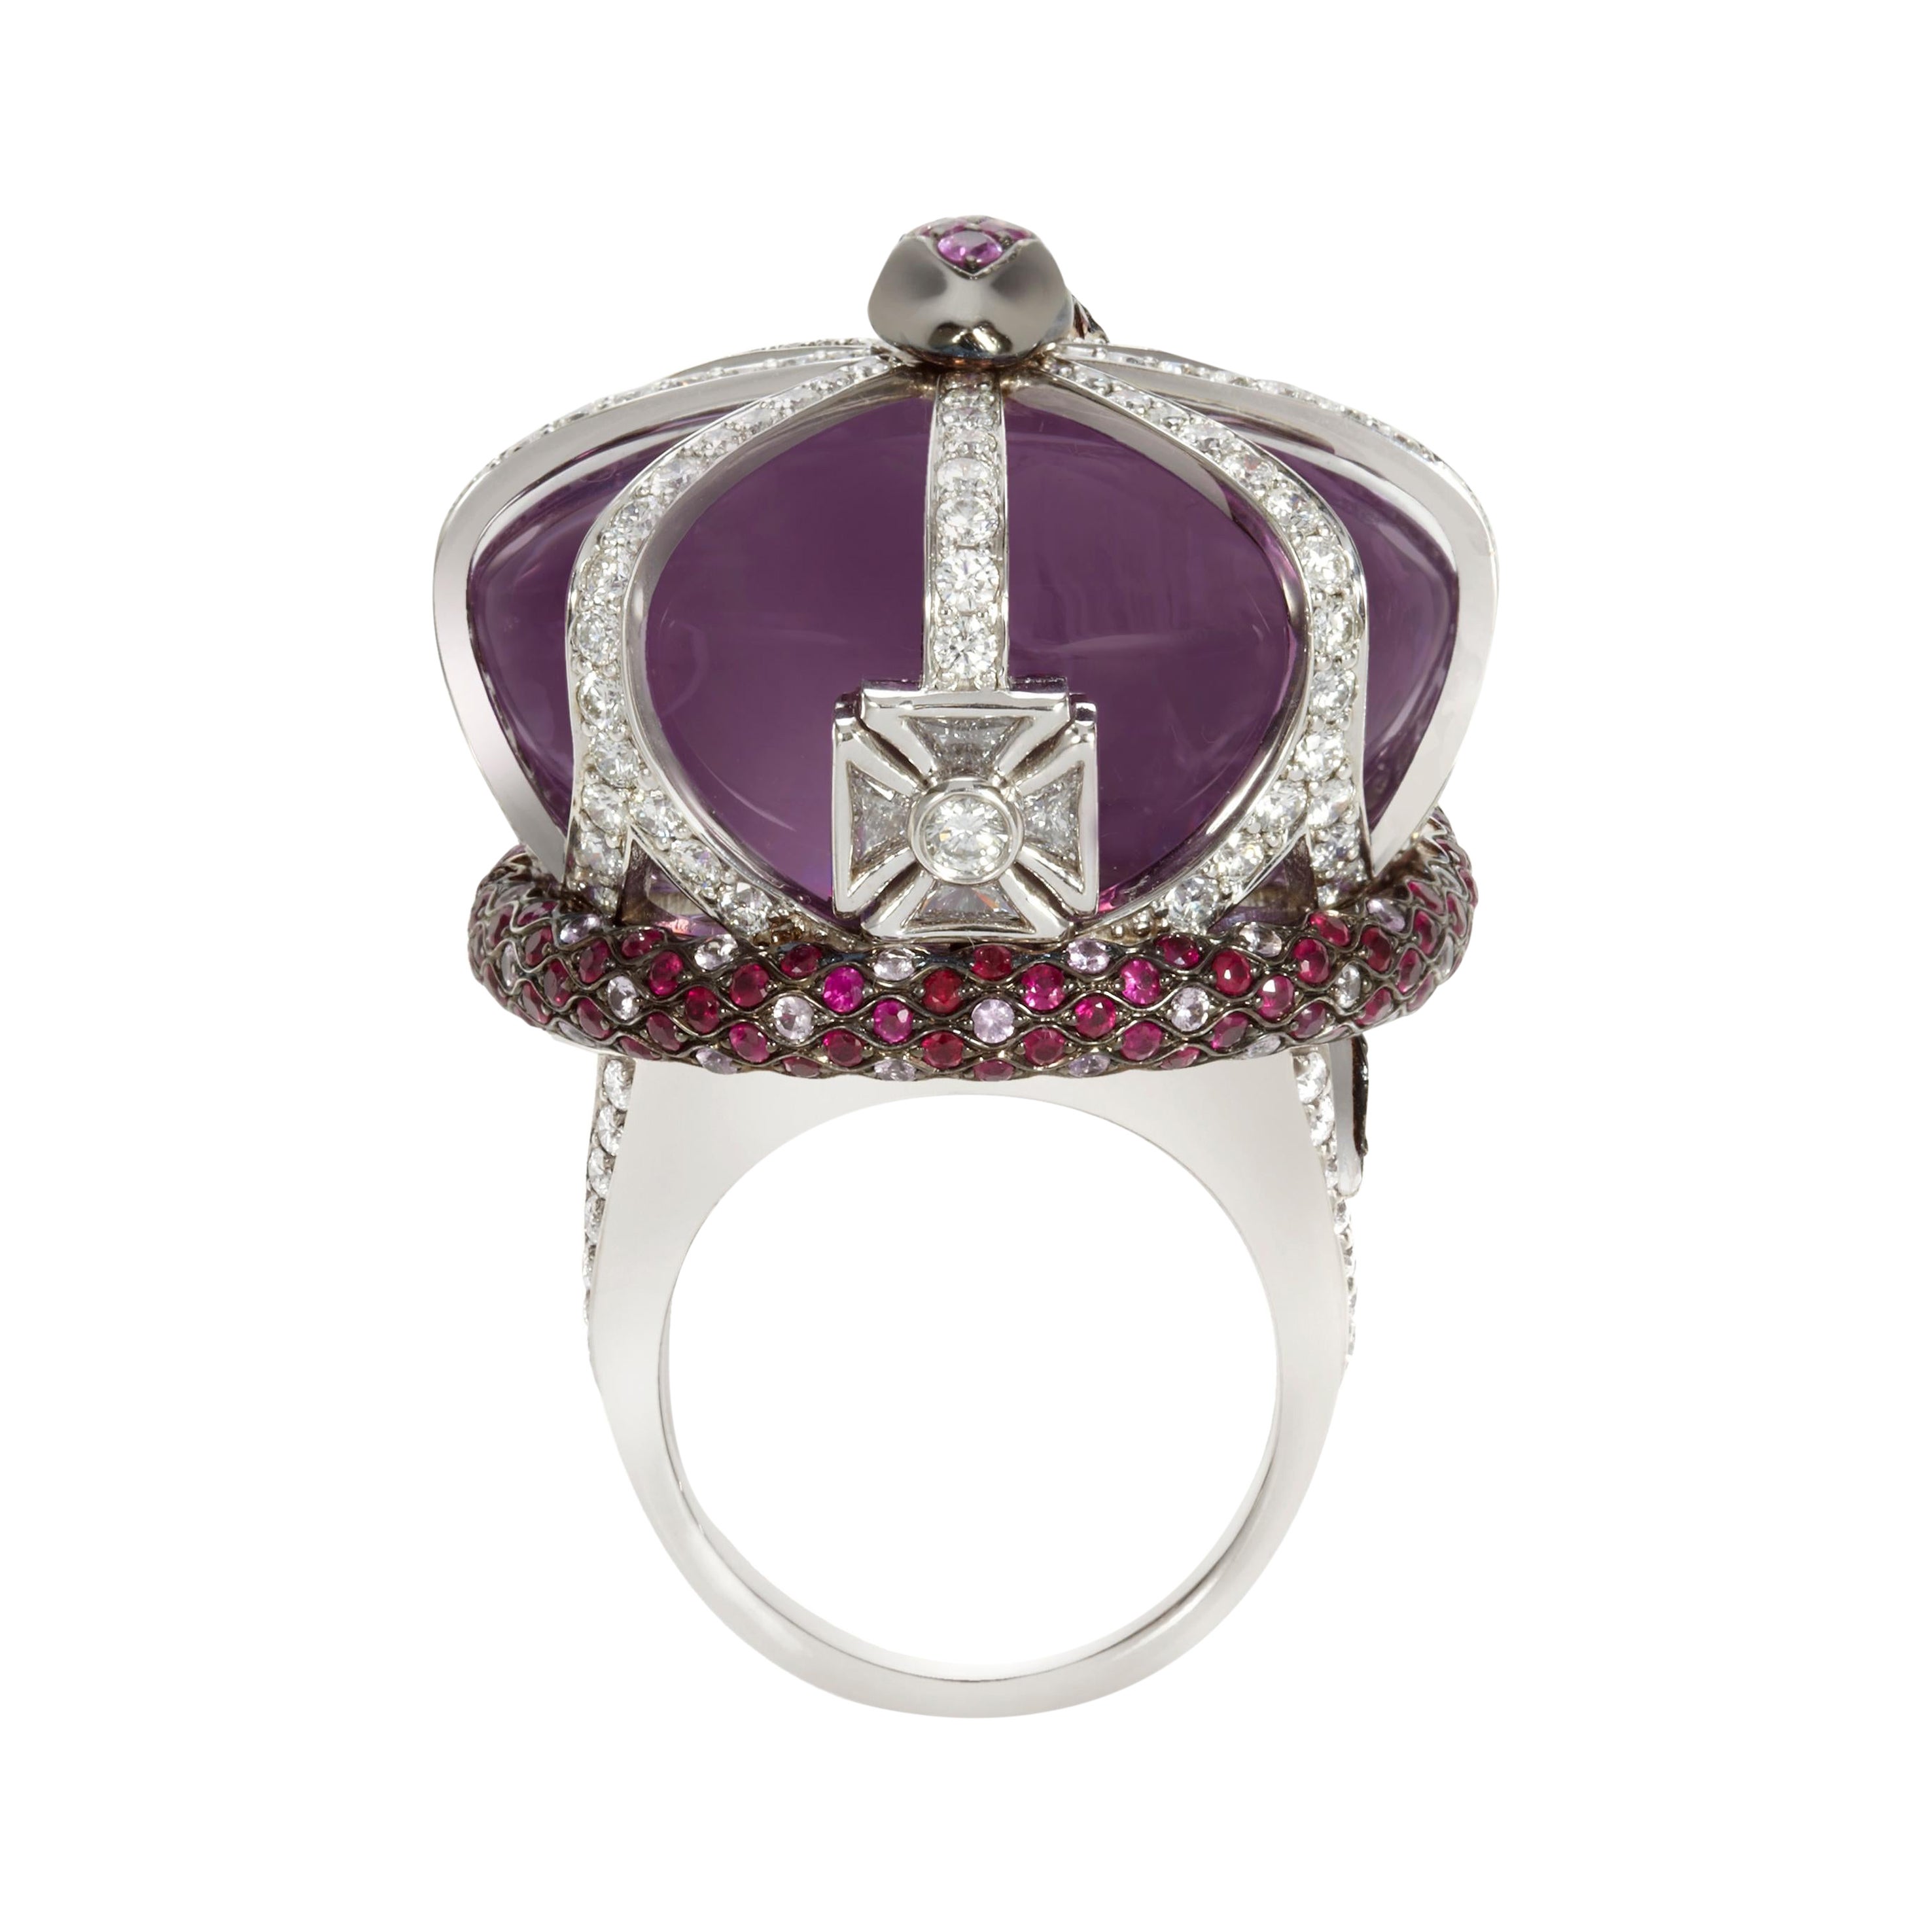 Bague princesse Sybarite Jewellery en or blanc 18 carats, rubis 1,28 carat et améthyste 